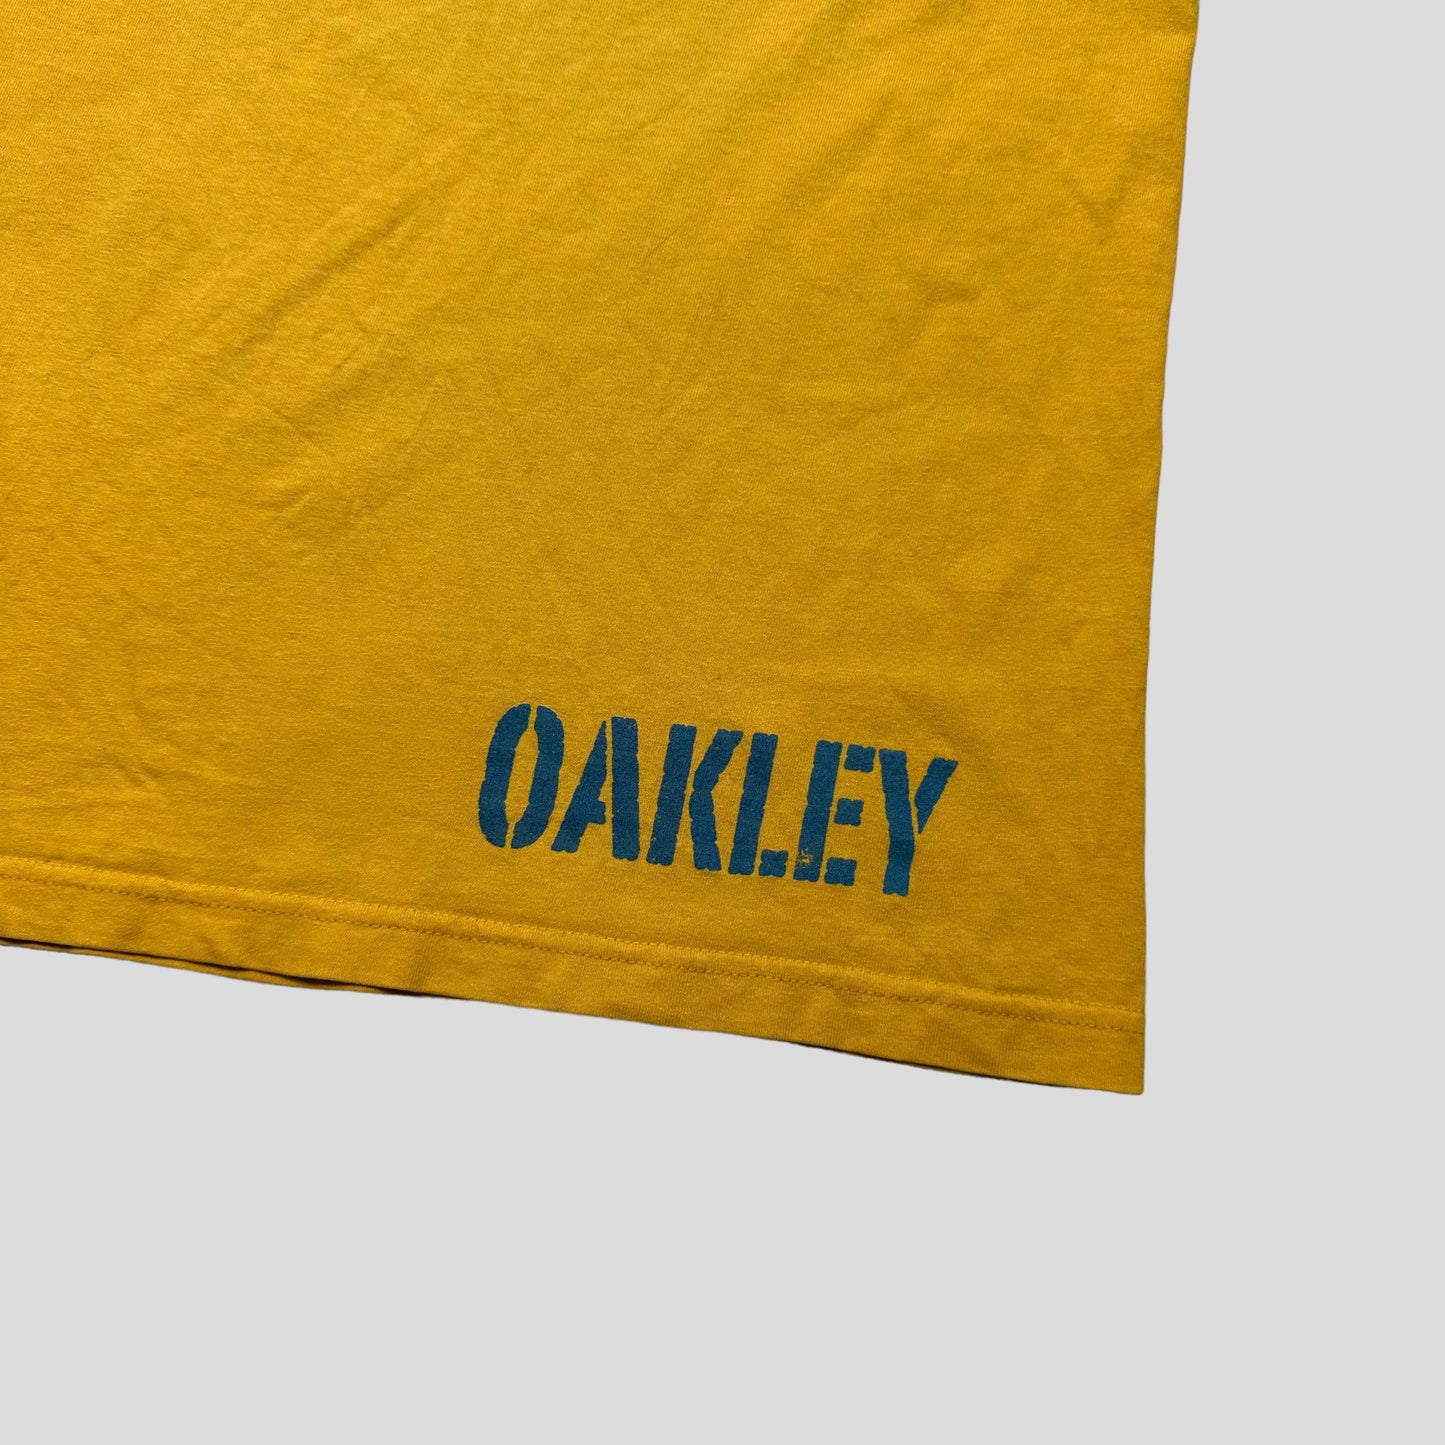 Oakley 00’s Industrial Design Logo T-shirt - M - Known Source